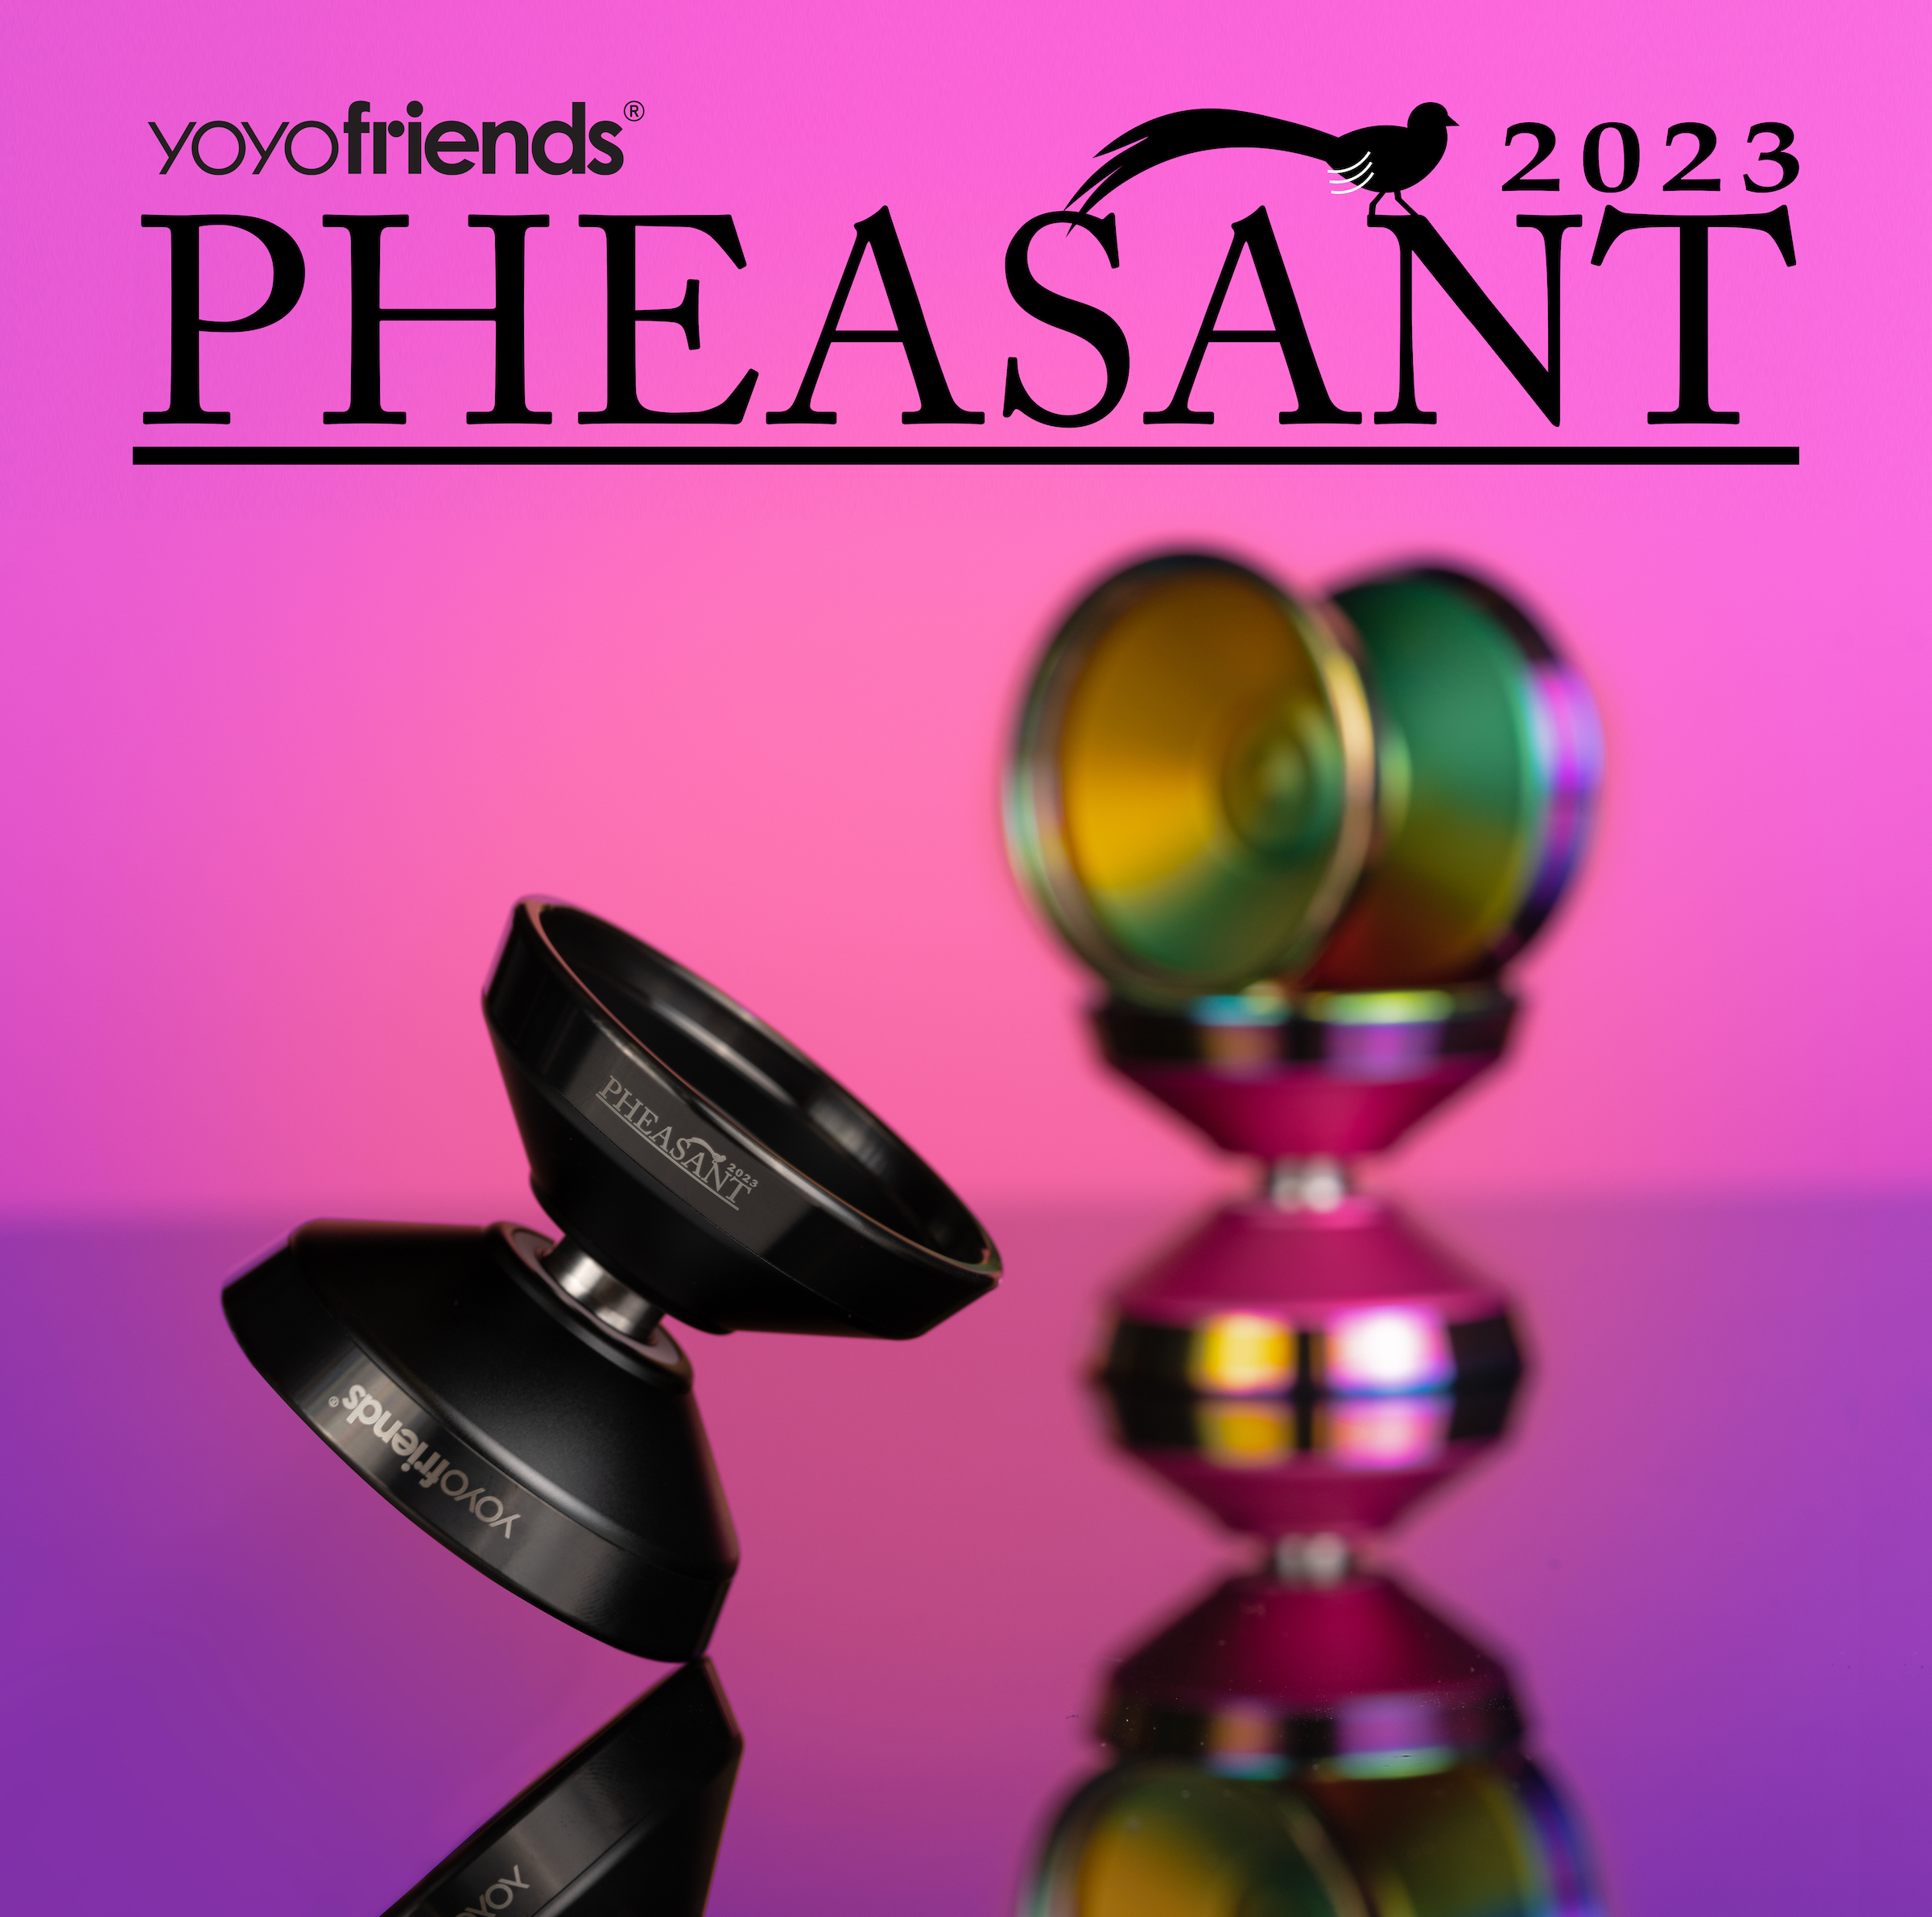 Pheasant 2023 by yoyofriends